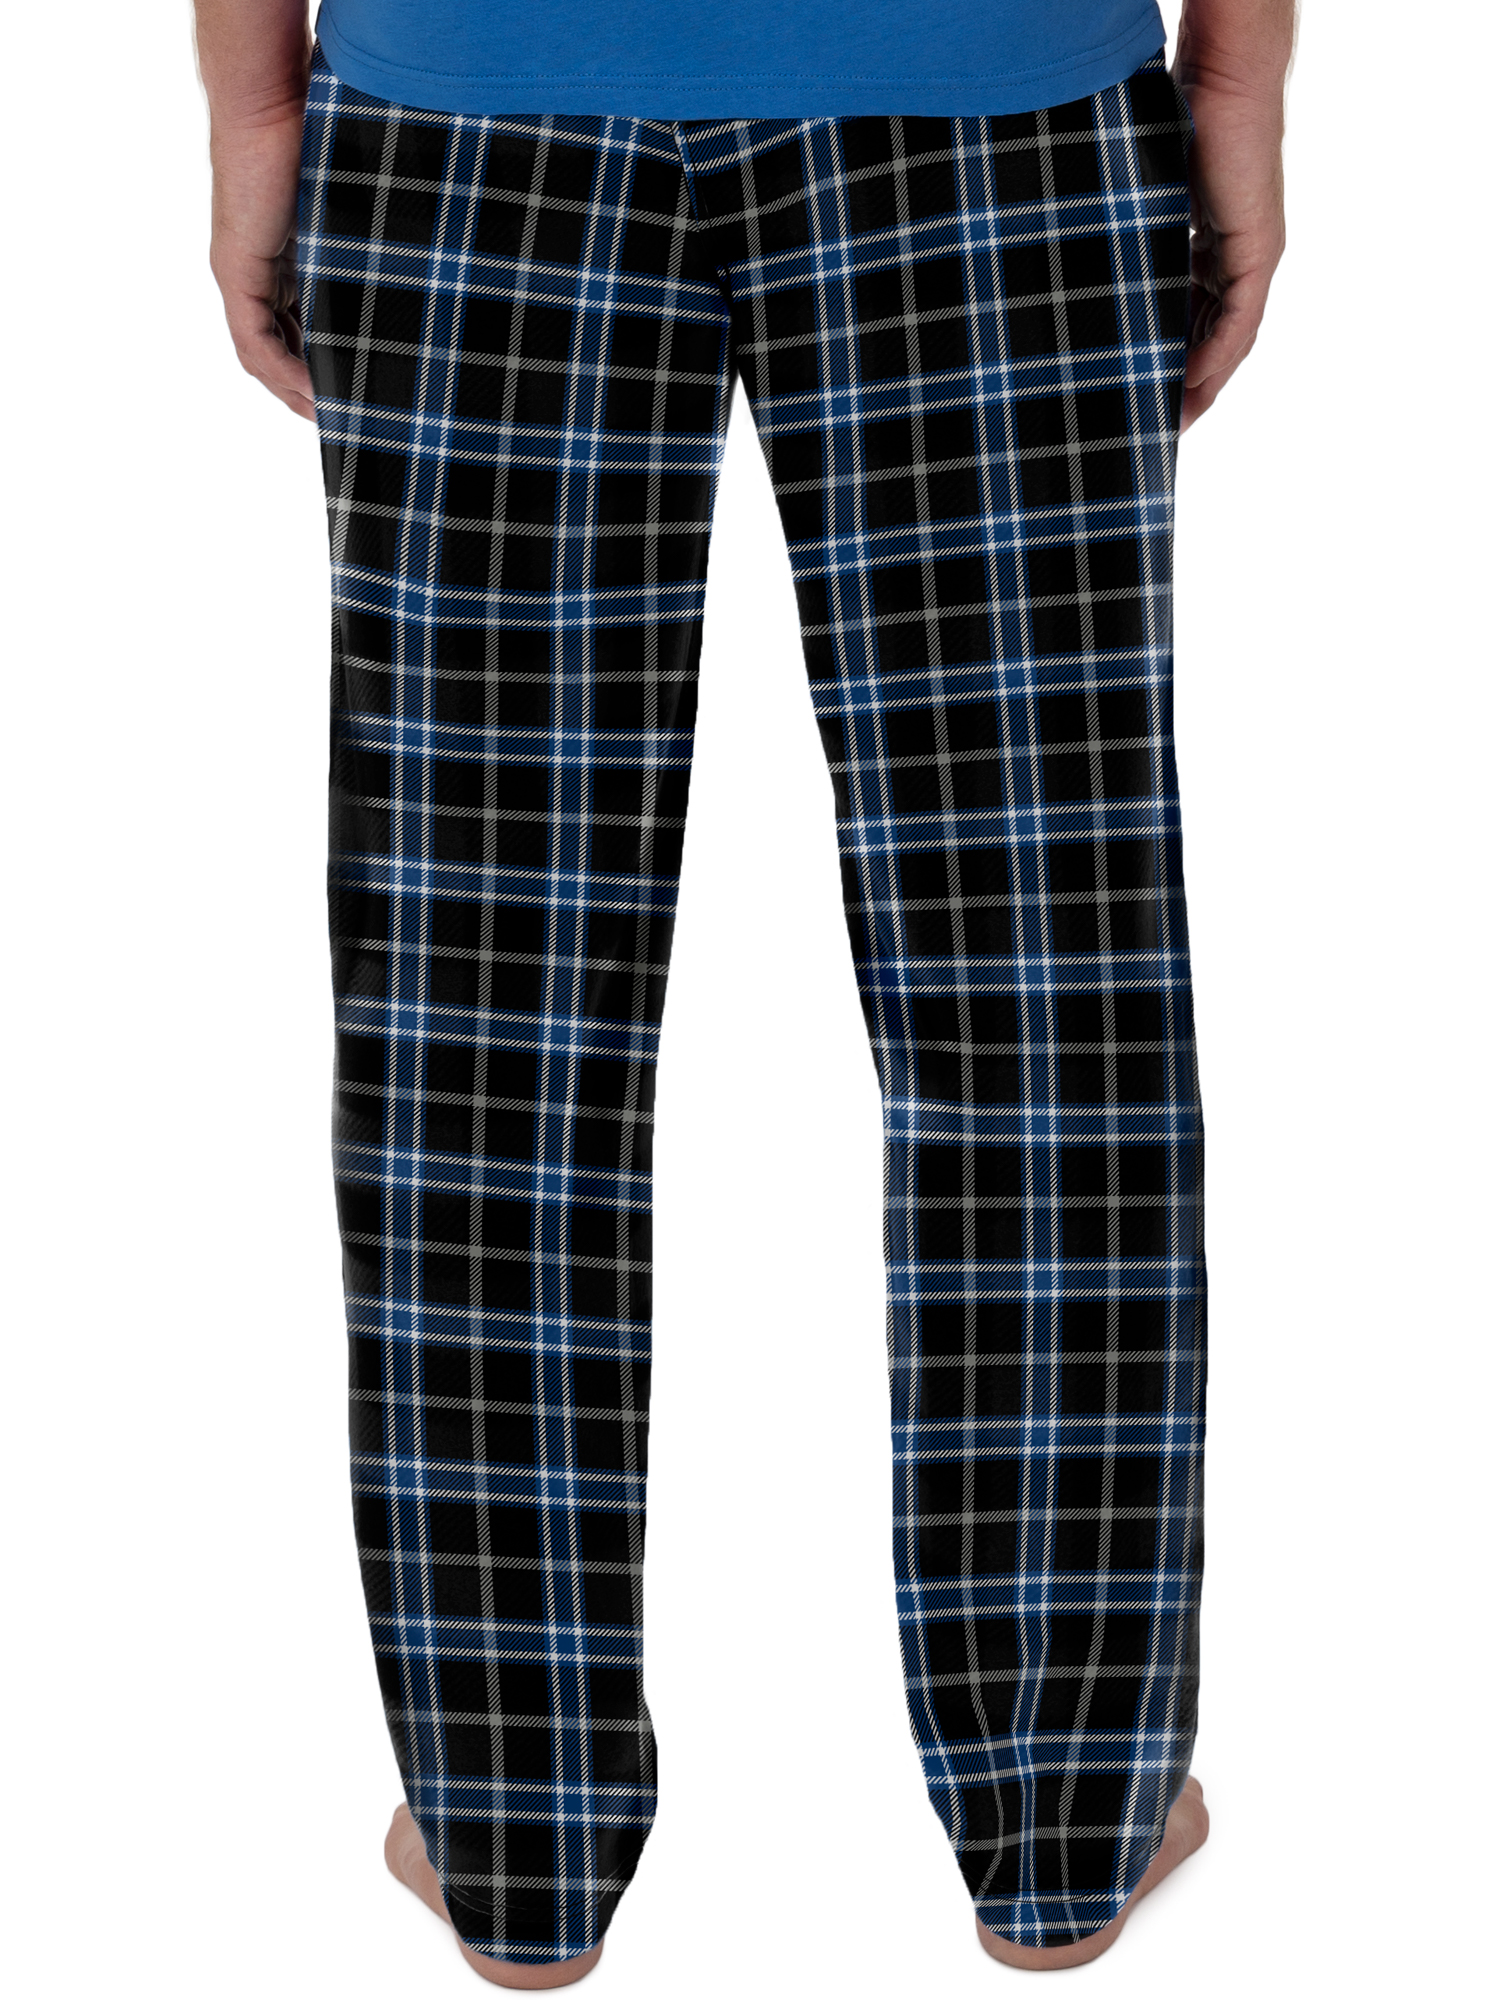 Fruit Of The Loom Men's Short Sleeve Crew Neck Top and Fleece Pajama Pant Set - image 2 of 5